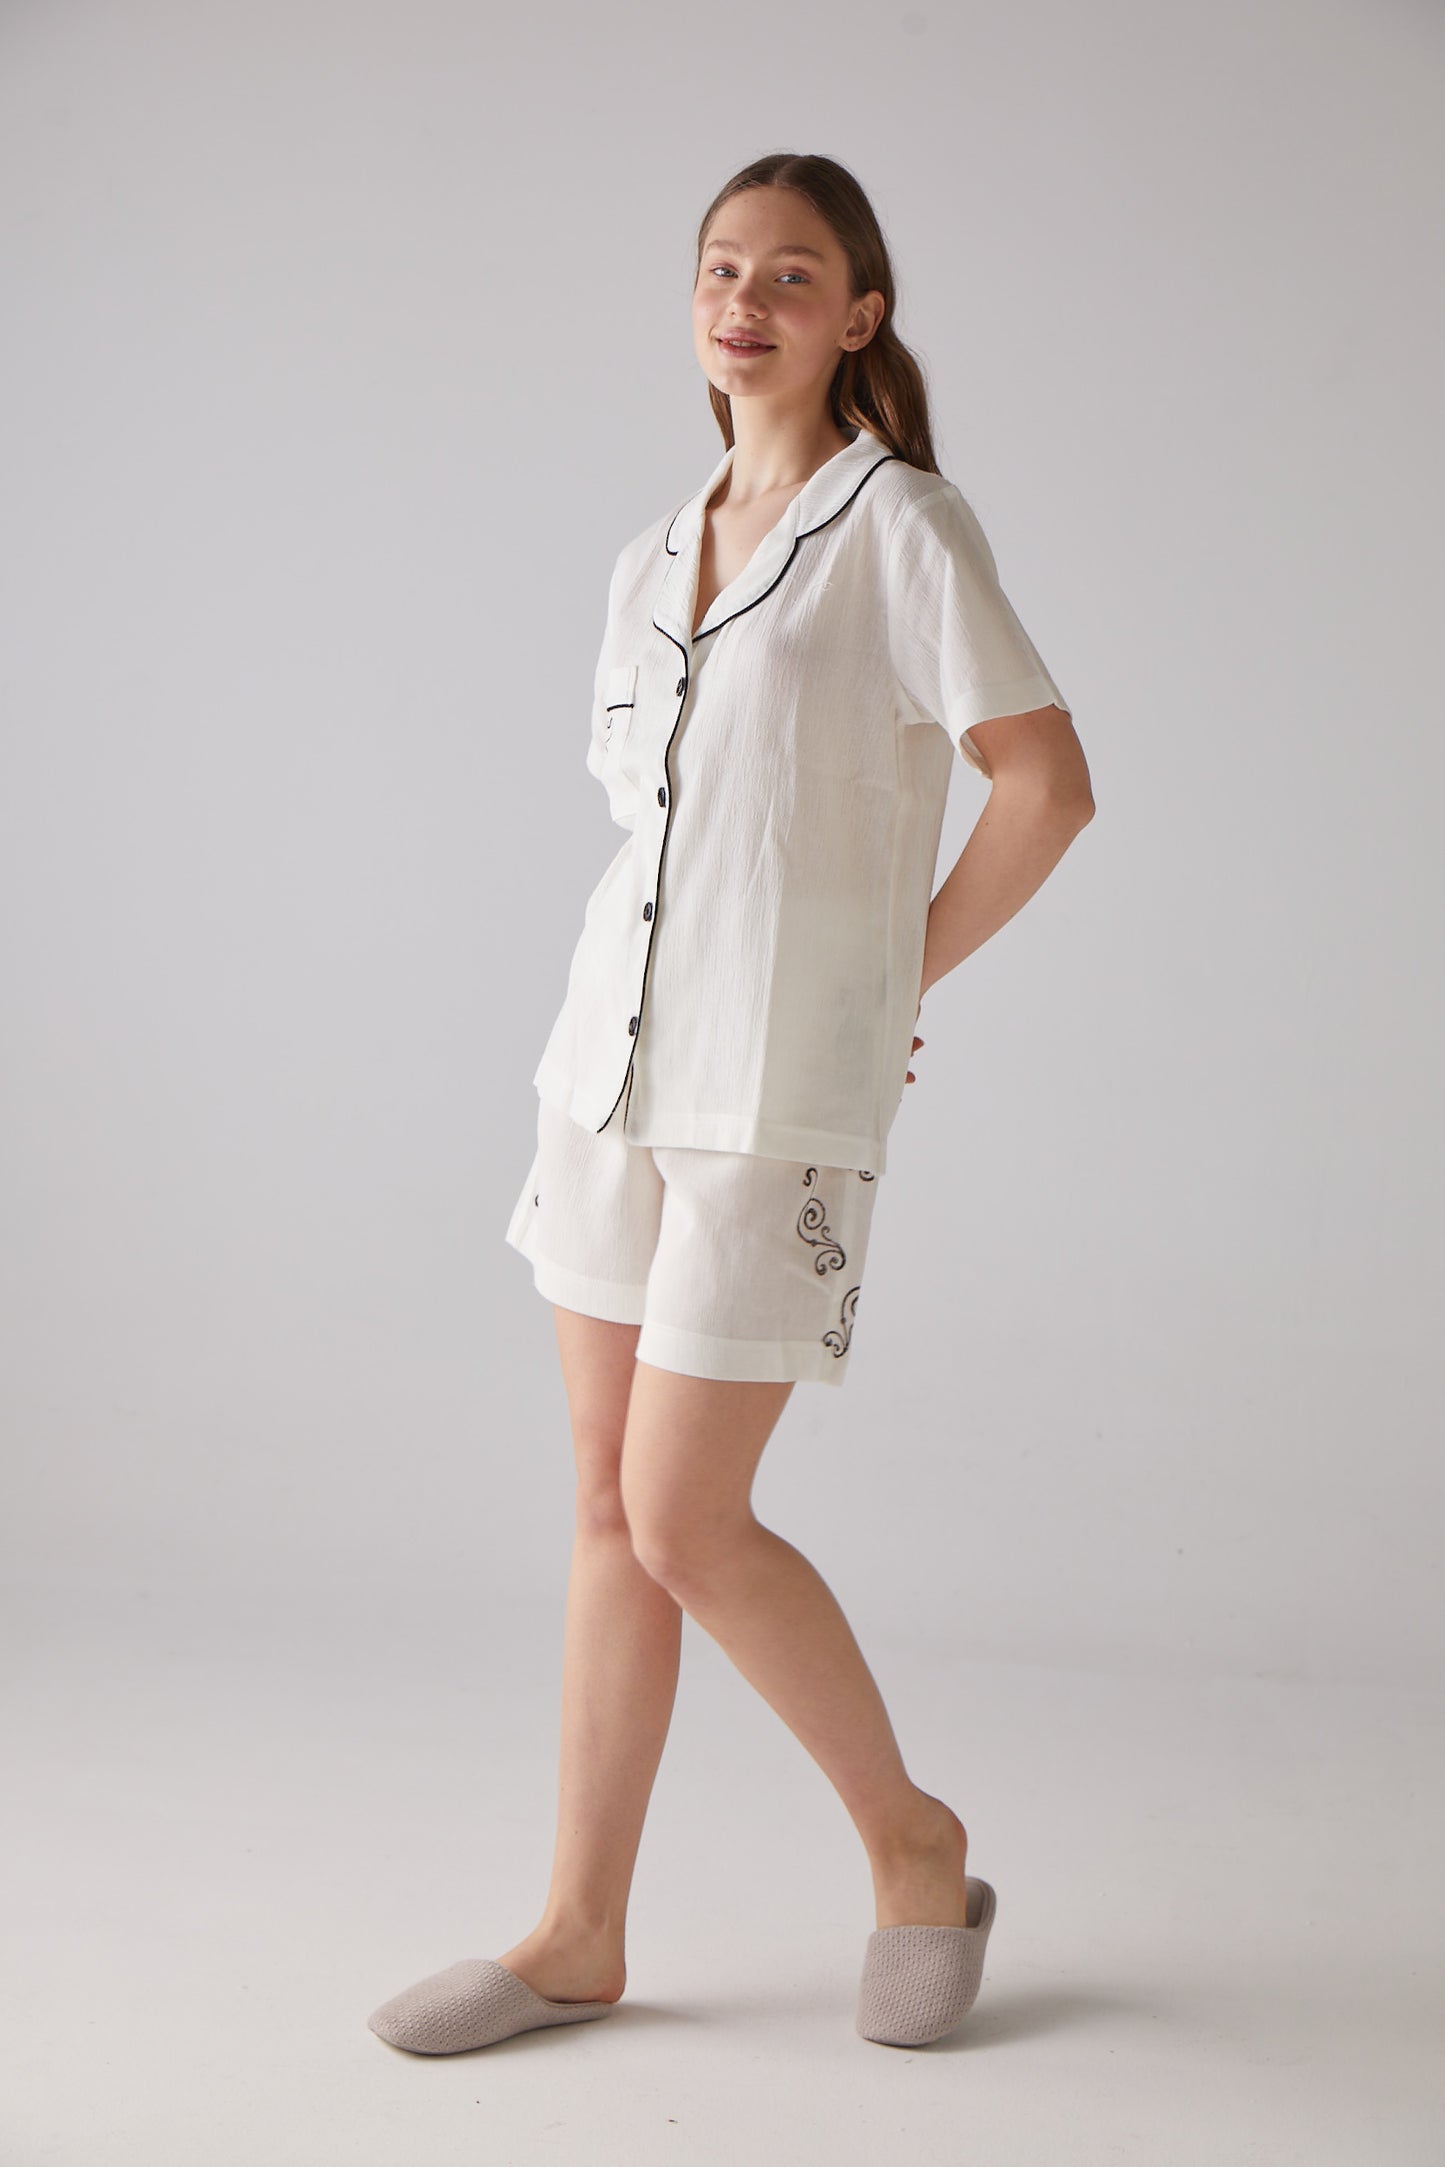 Clef Pattern White Short Pyjama Set - 100% Organic Cotton